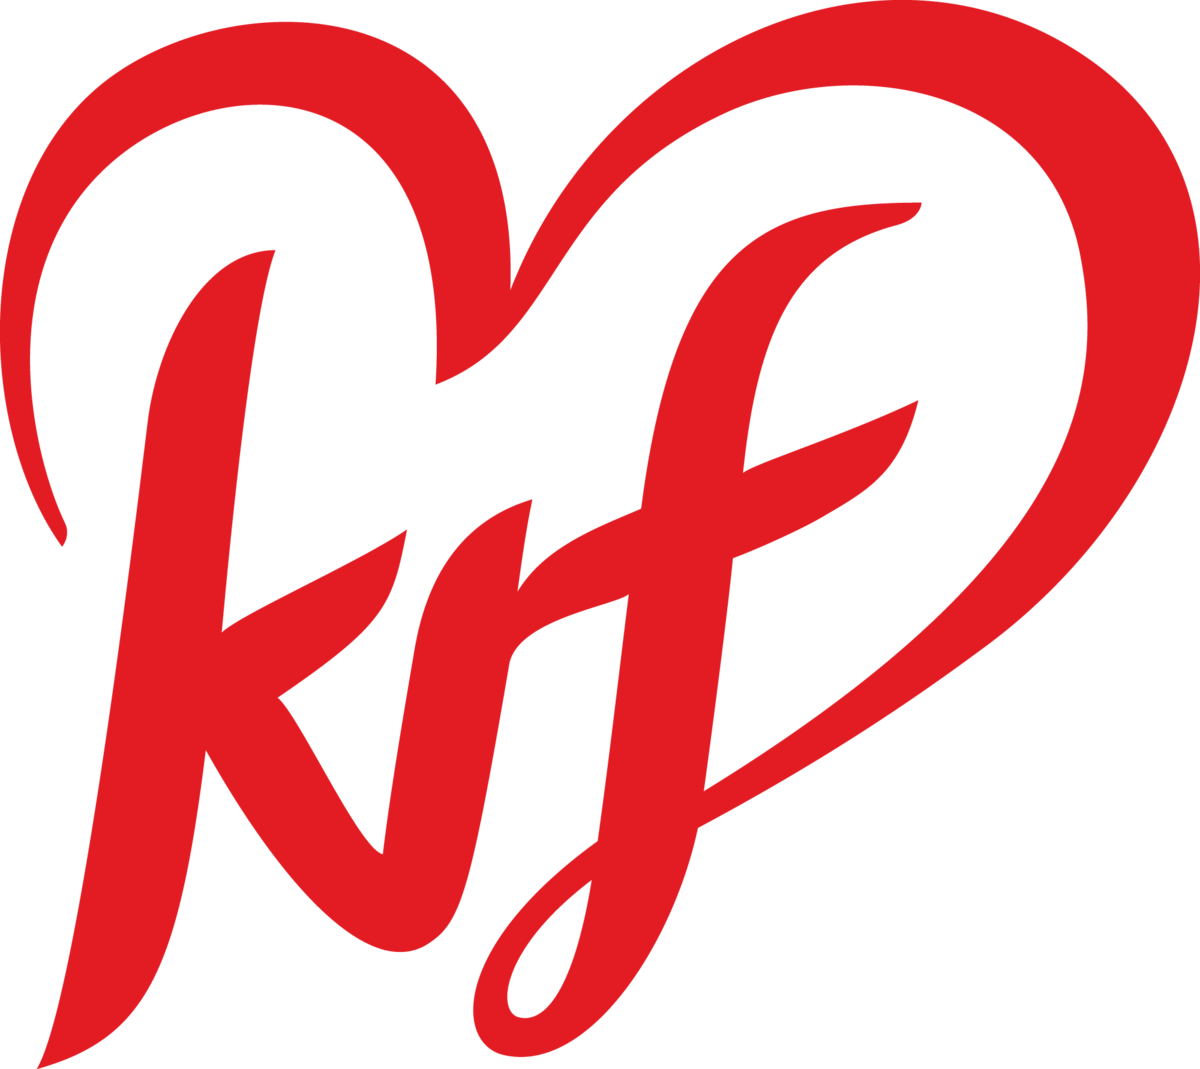 KrFs logo